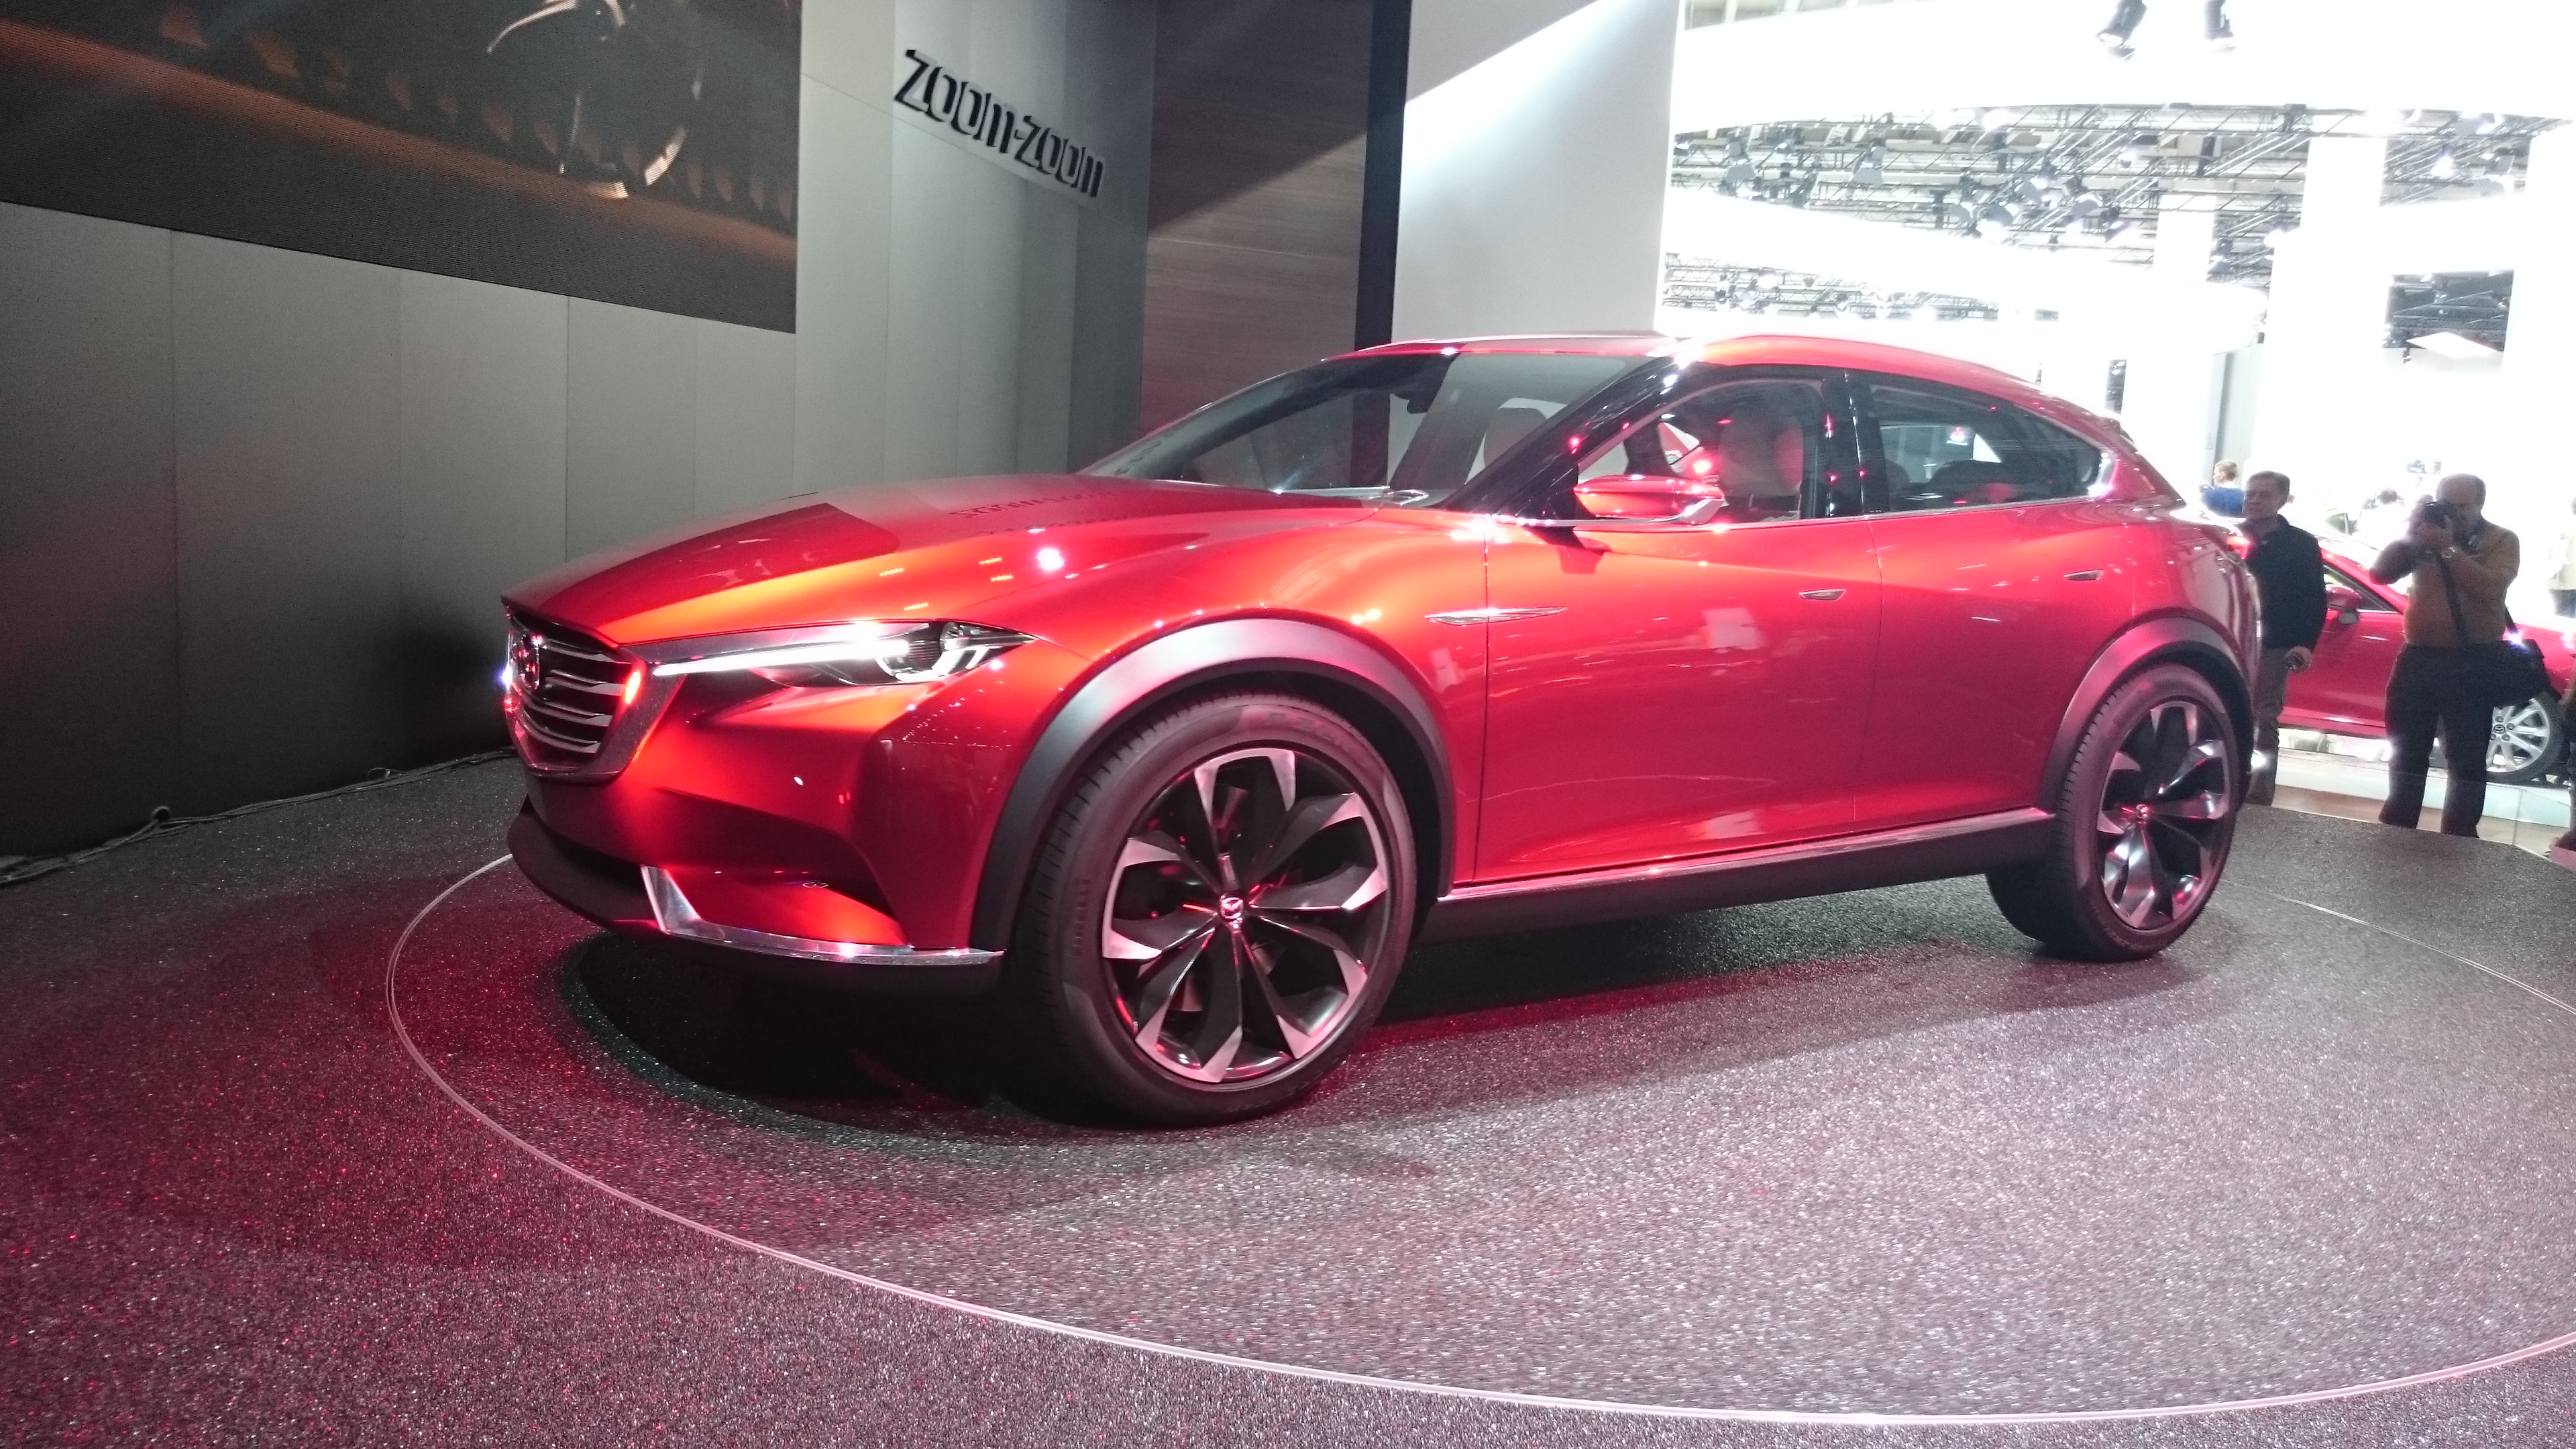 Fotos 360 de Mazda CX-3 #VidePan en #IAA2015